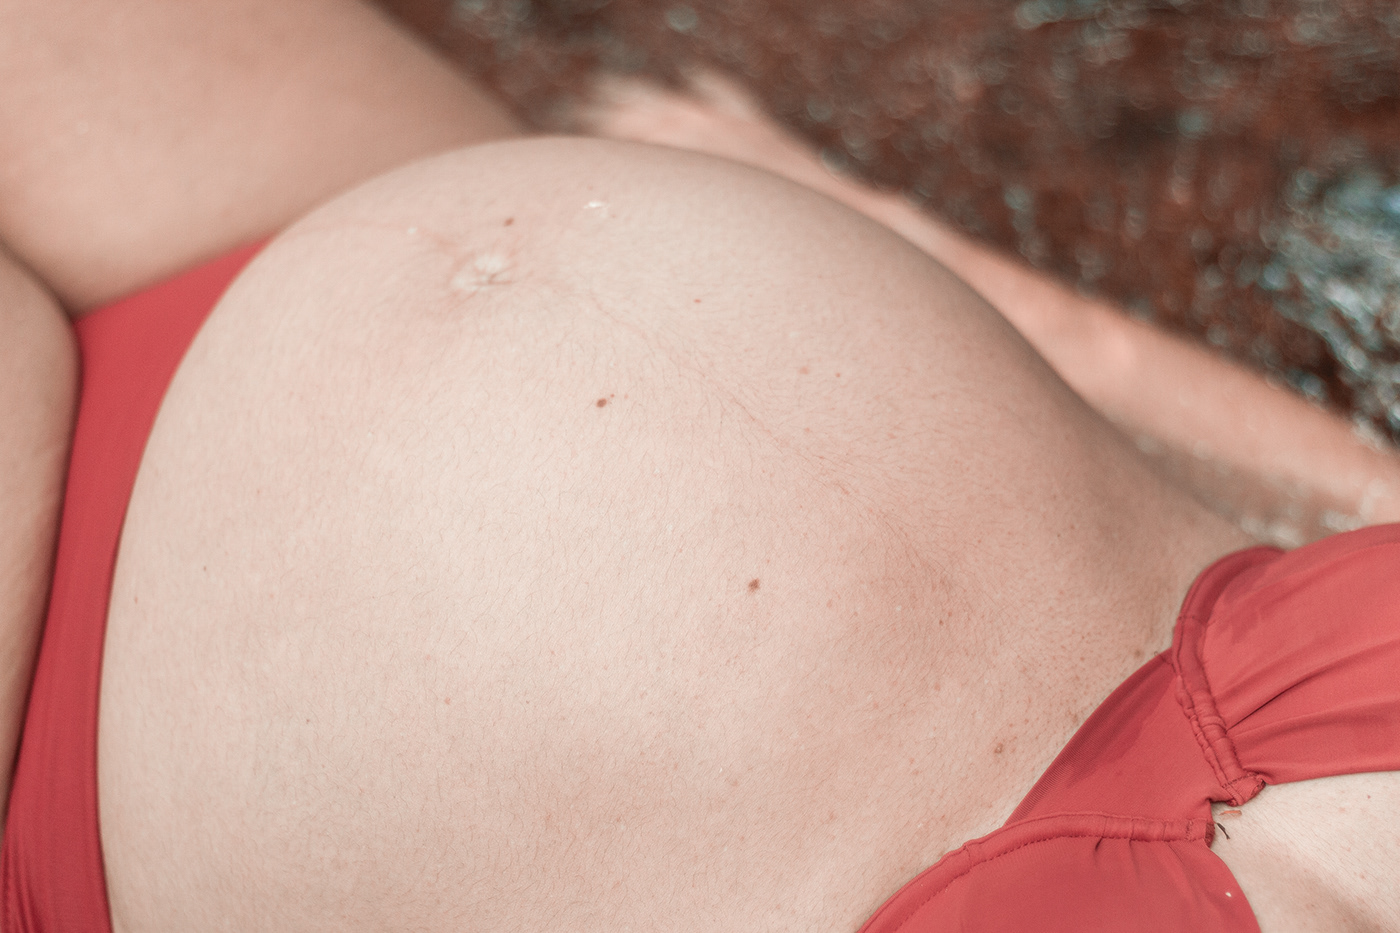 Ensaio gestante  ensaio feminino gestante gravidez grávida pregnant pregnancy natureza Nature Rio de Janeiro